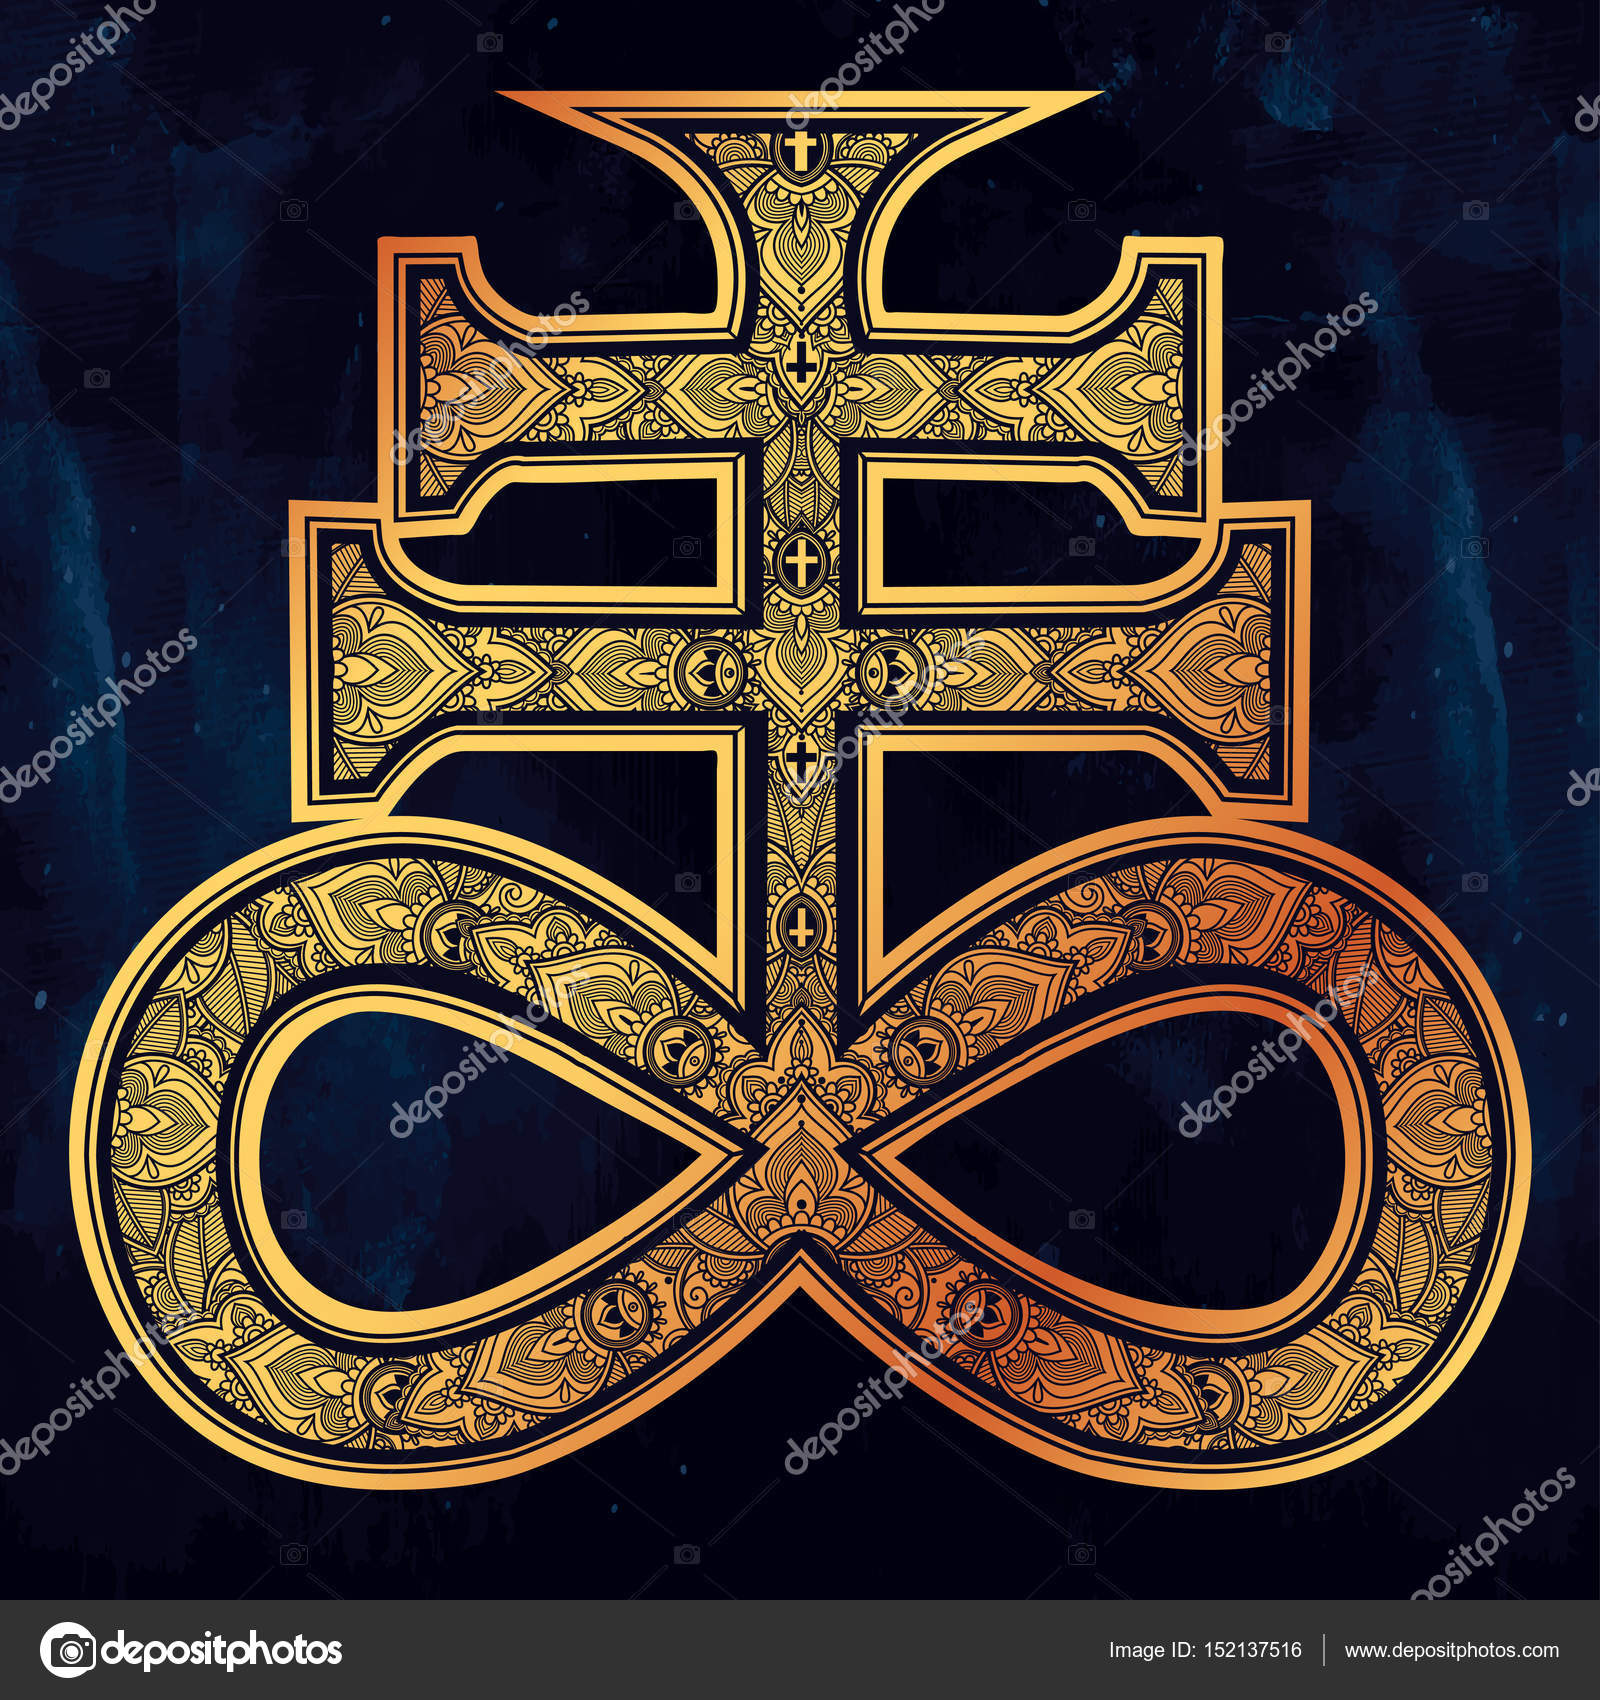 depositphotos_152137516-stock-illustration-the-satanic-cross-the-seal.jpg (1600×1700)